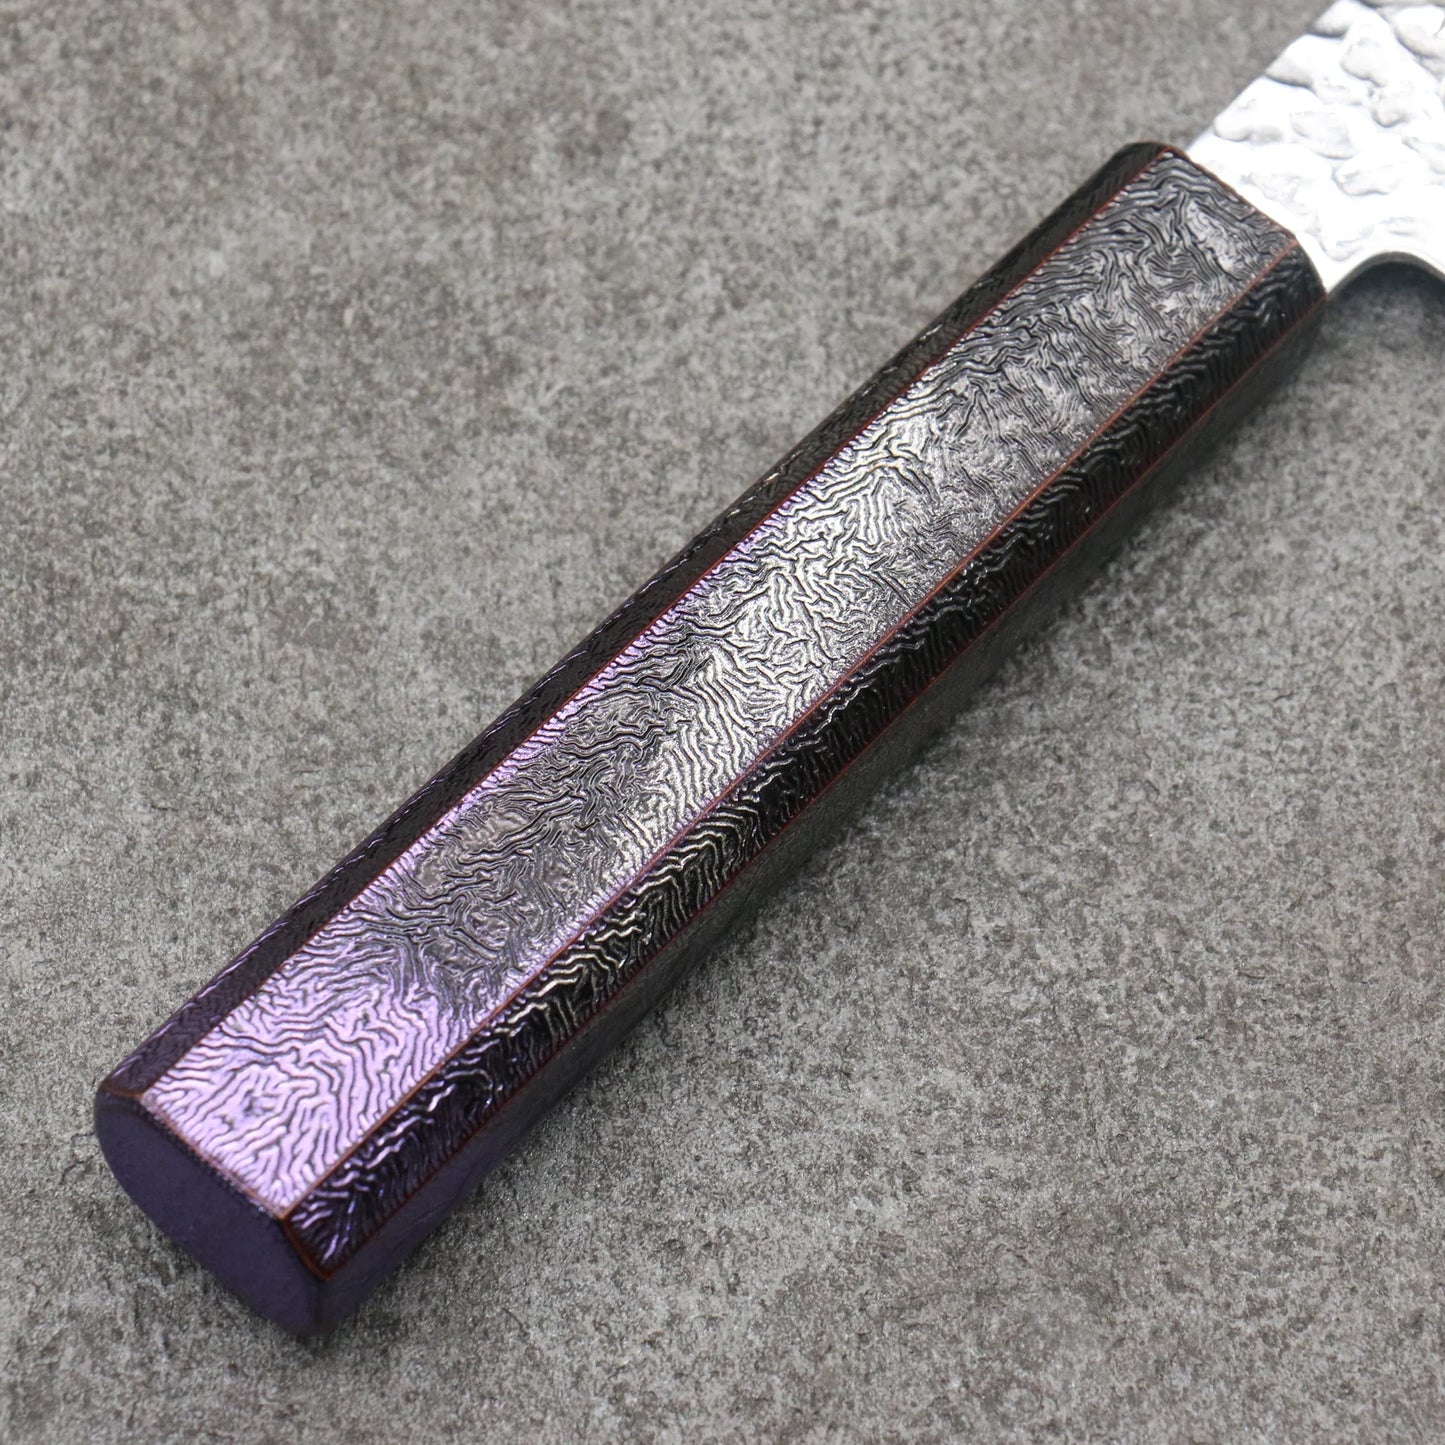 Sakai Takayuki Rinnou VG10 33 Layer Damascus Nakiri Japanese Knife 160mm Purple Lacquered Handle